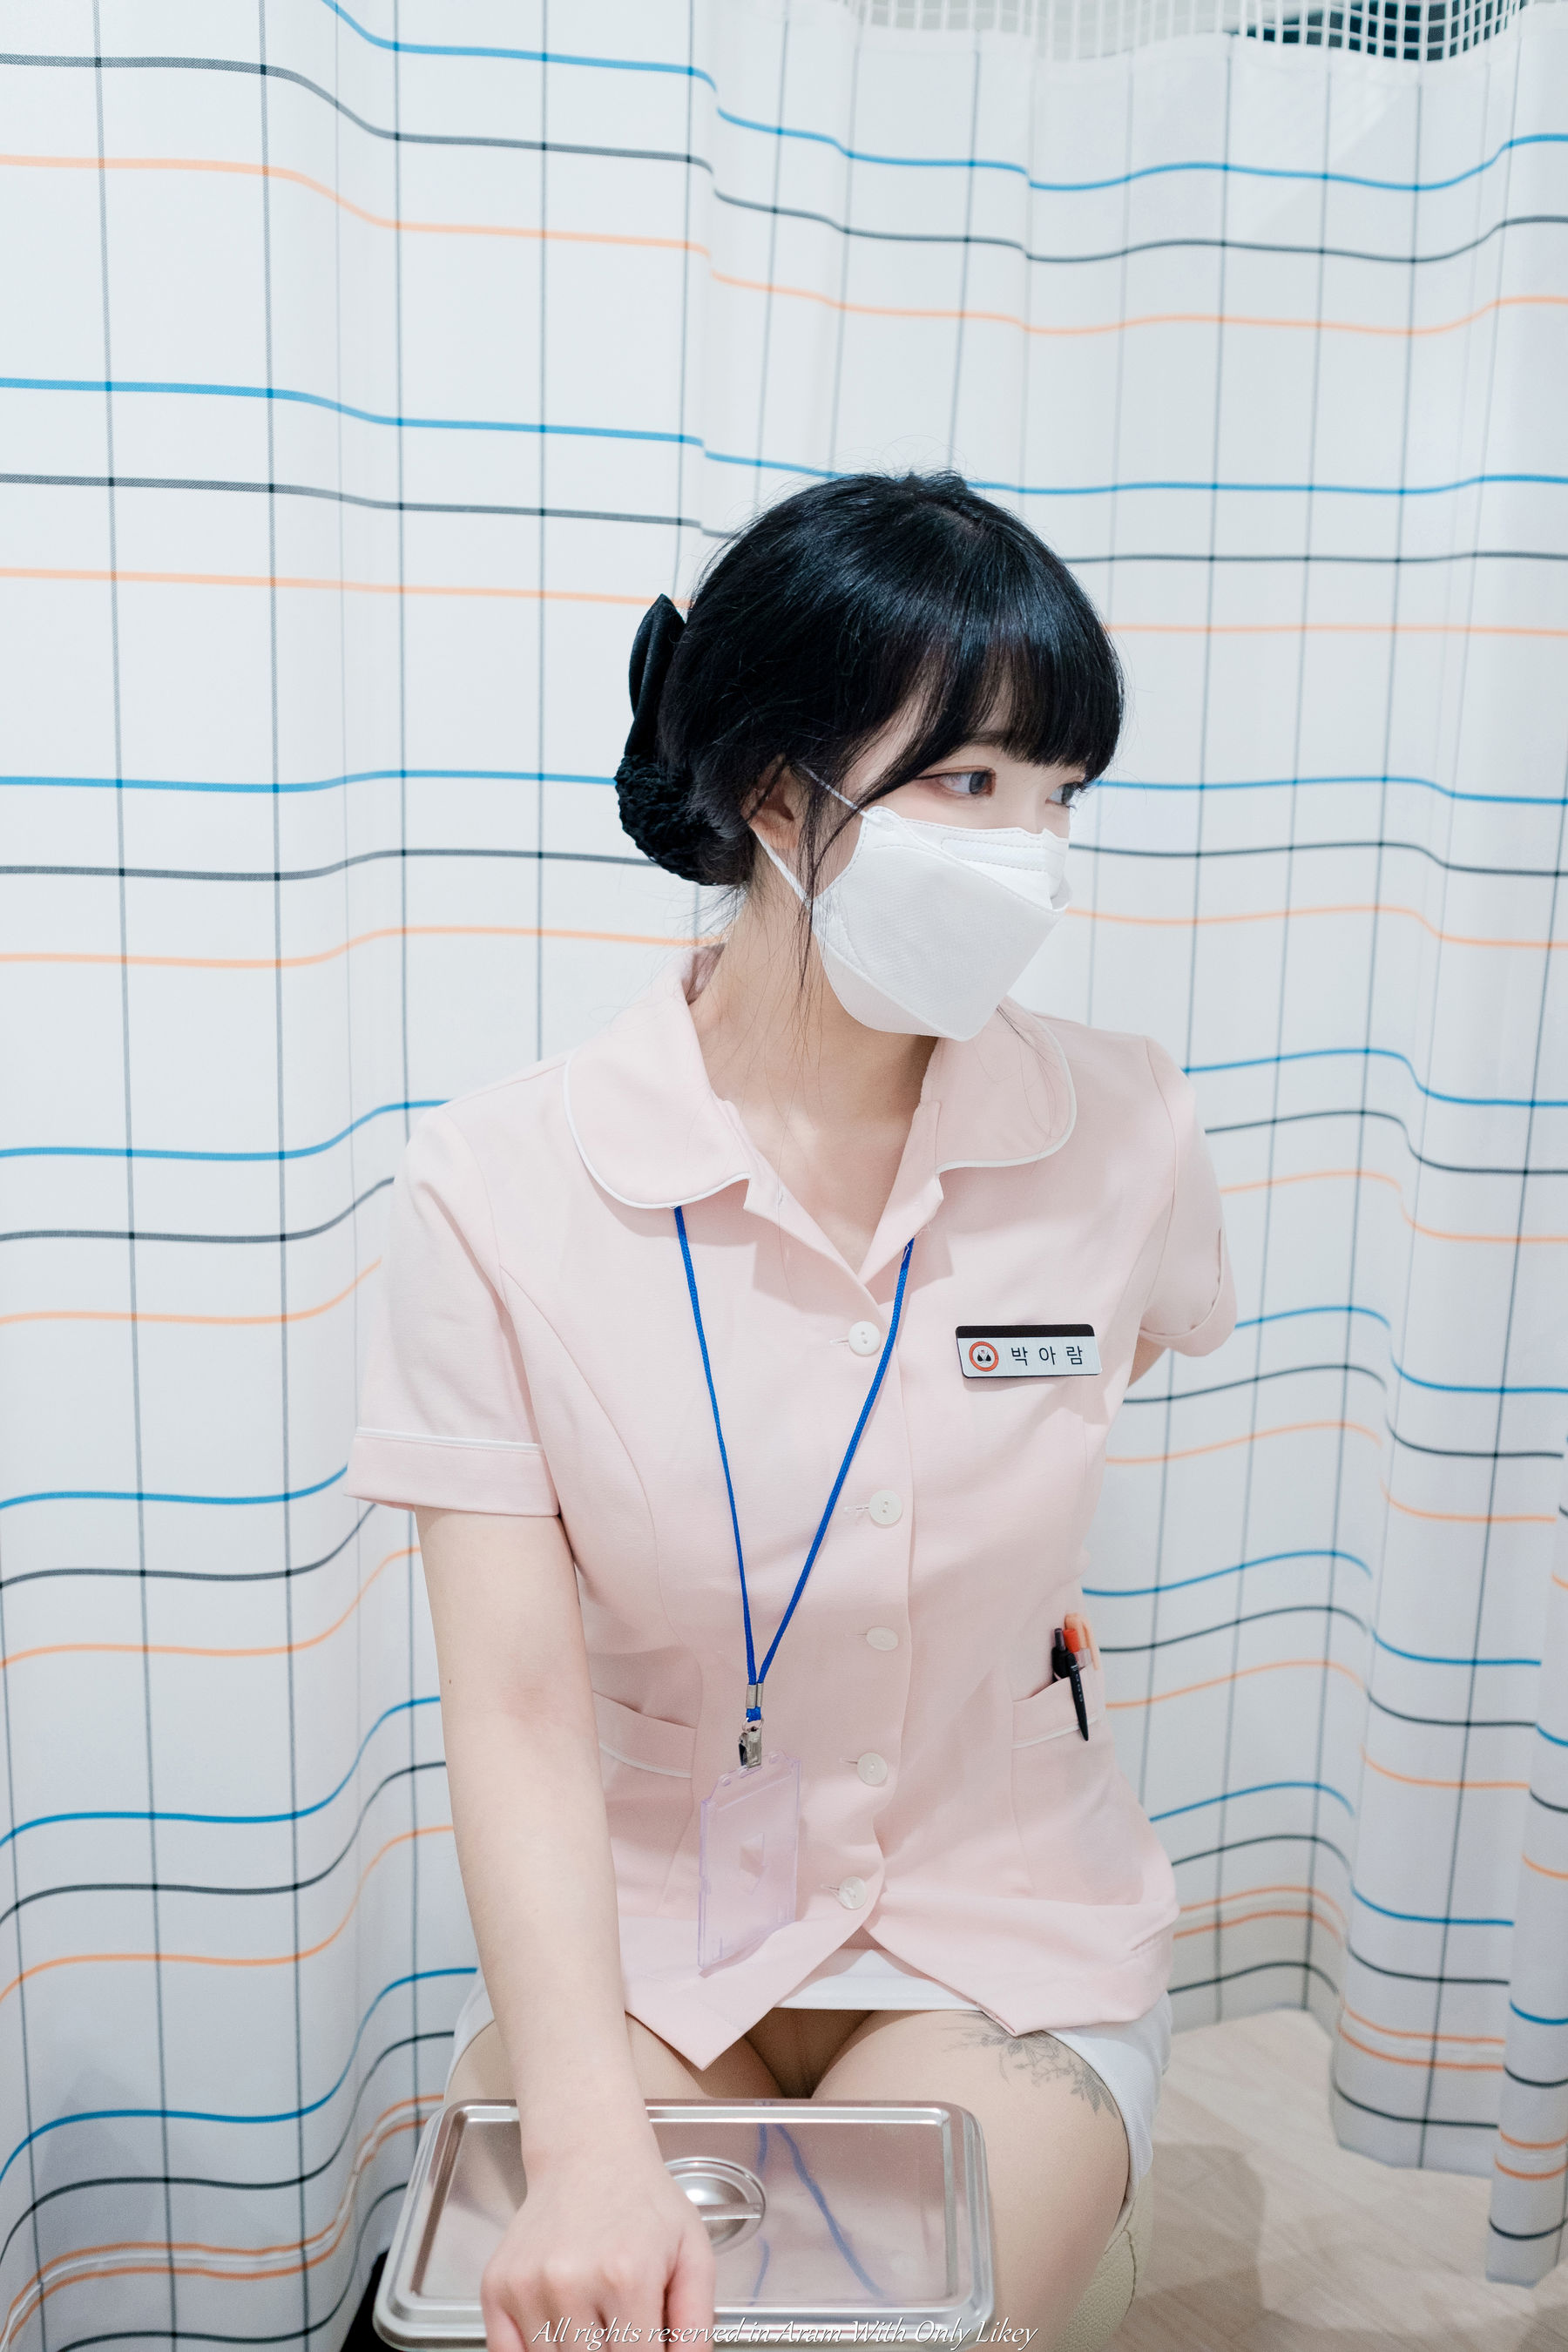 [LIKEY] Aram - A urologist Nurse - 图库库